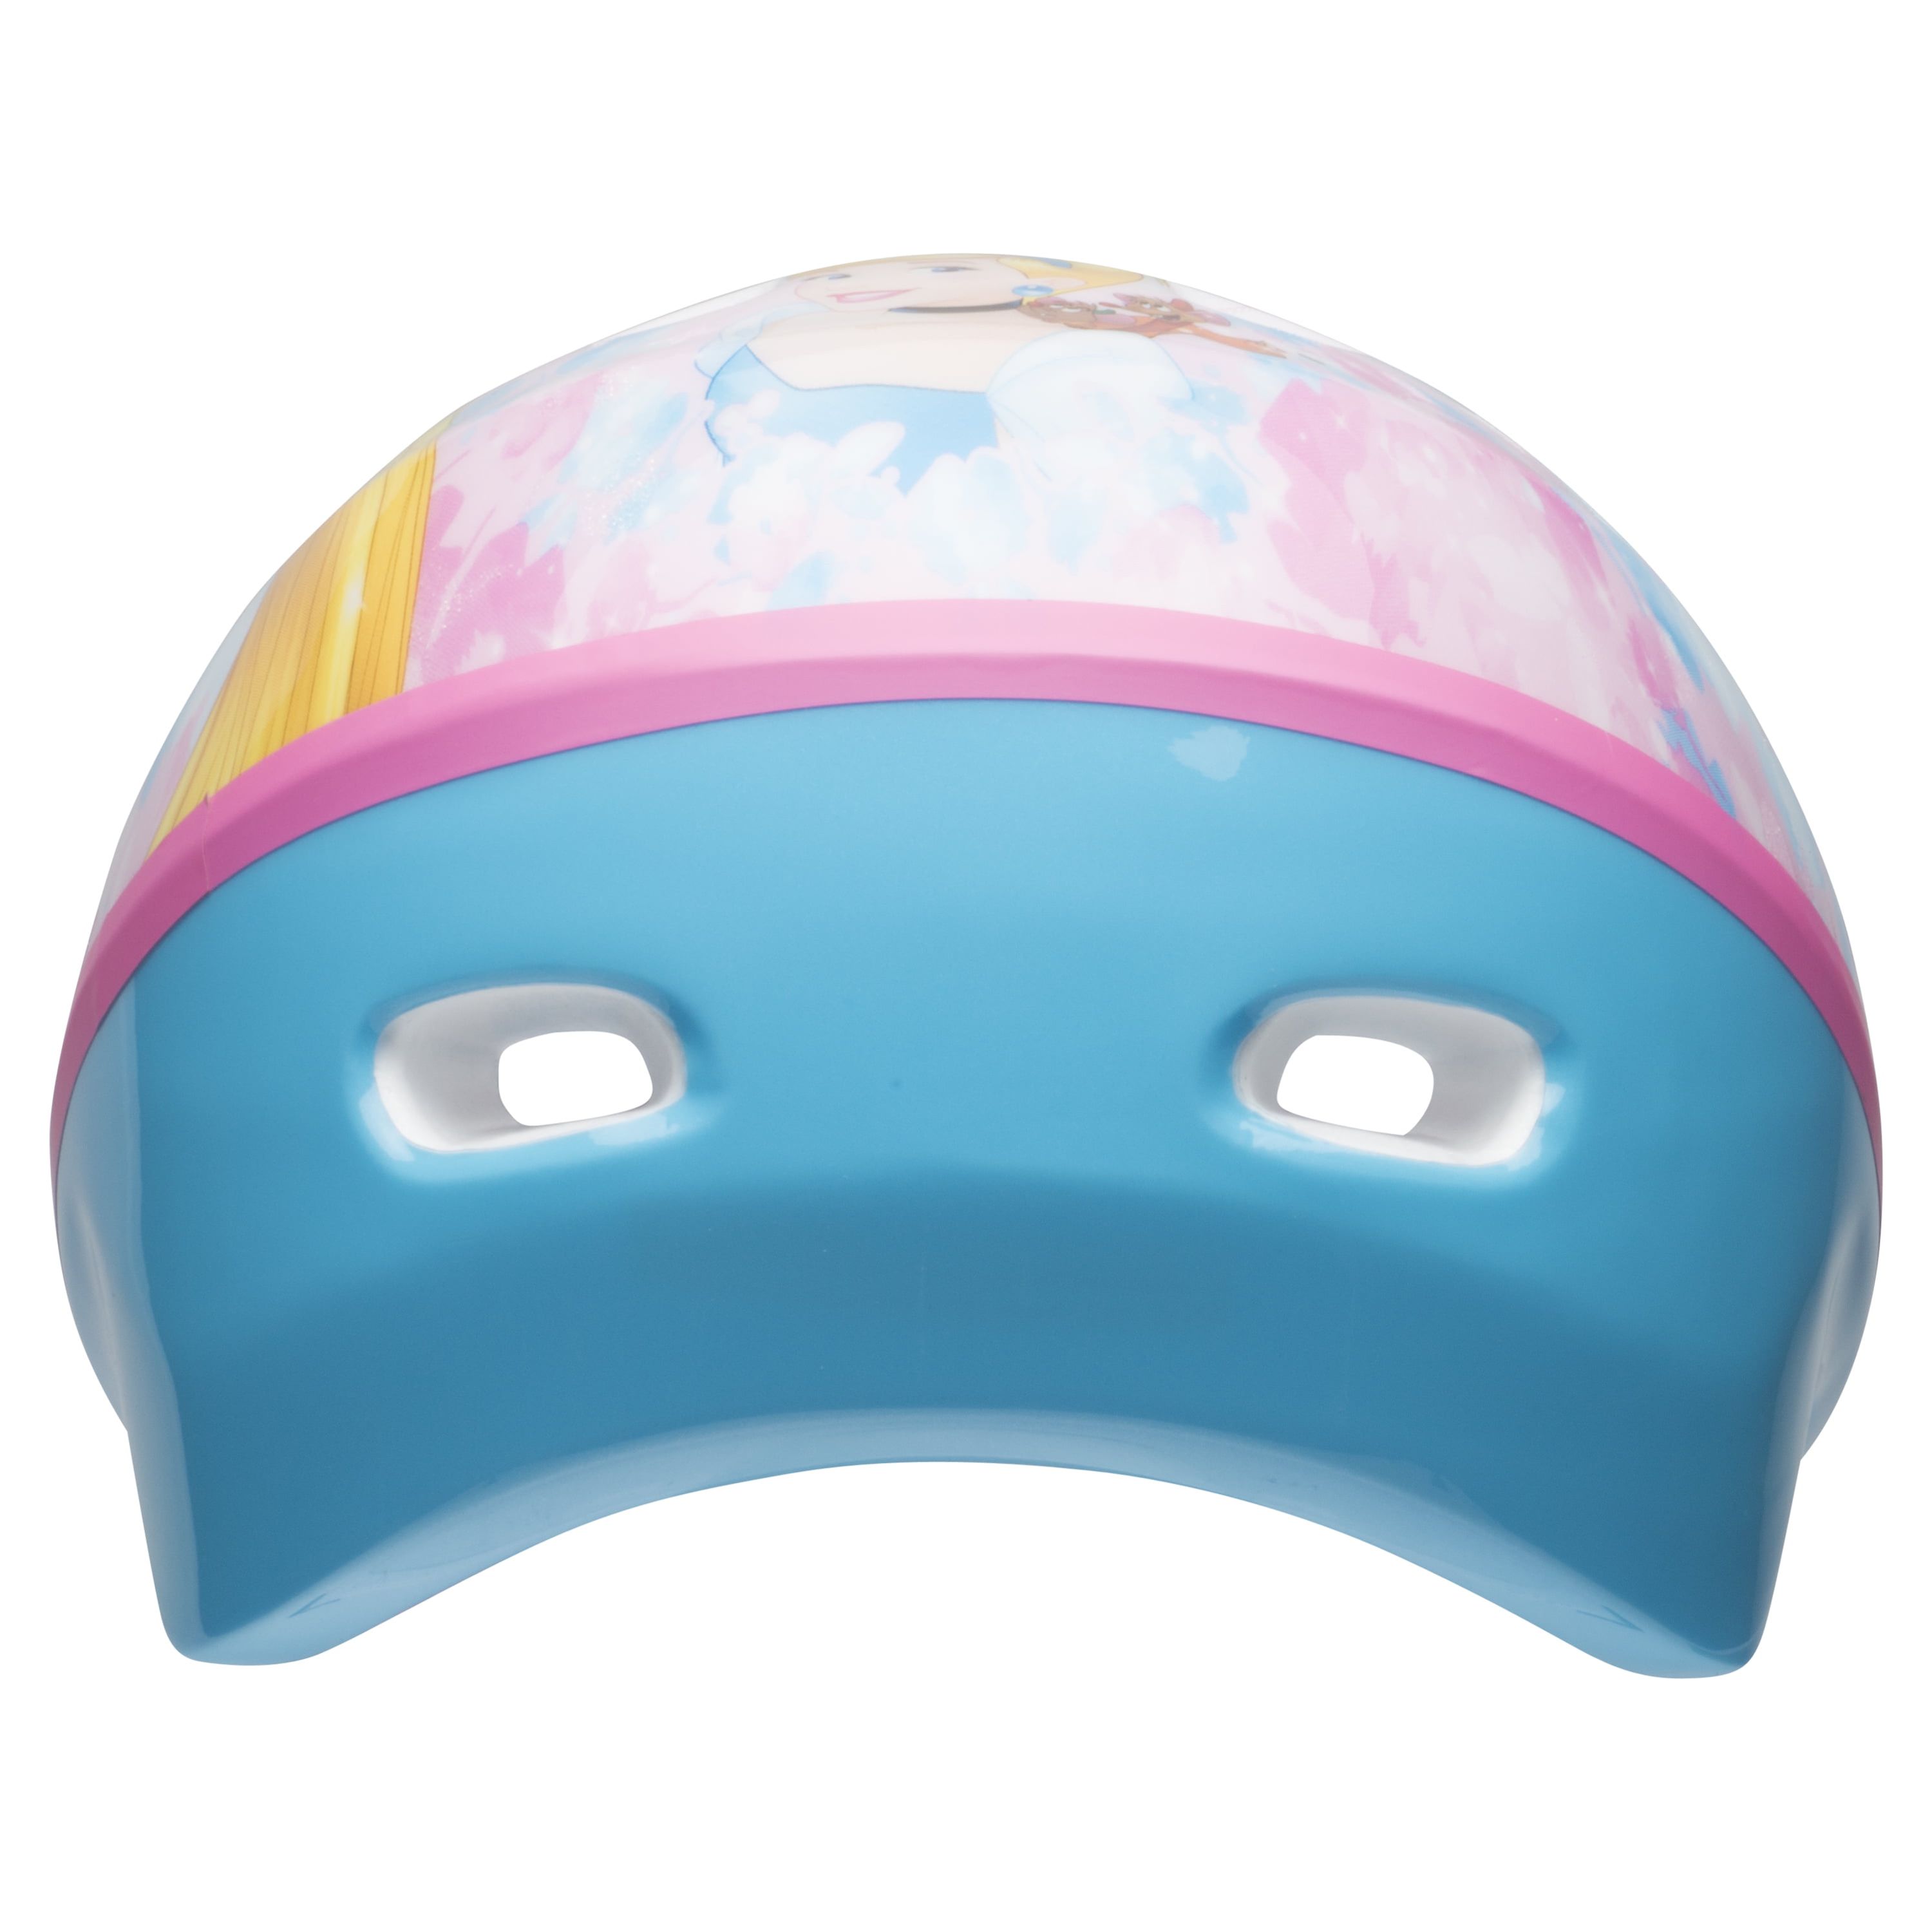 Disney Princesses Rule Glitter Bell Bike Helmet, Pink/Light Blue, Toddler 3+ (48-52cm) - image 3 of 8